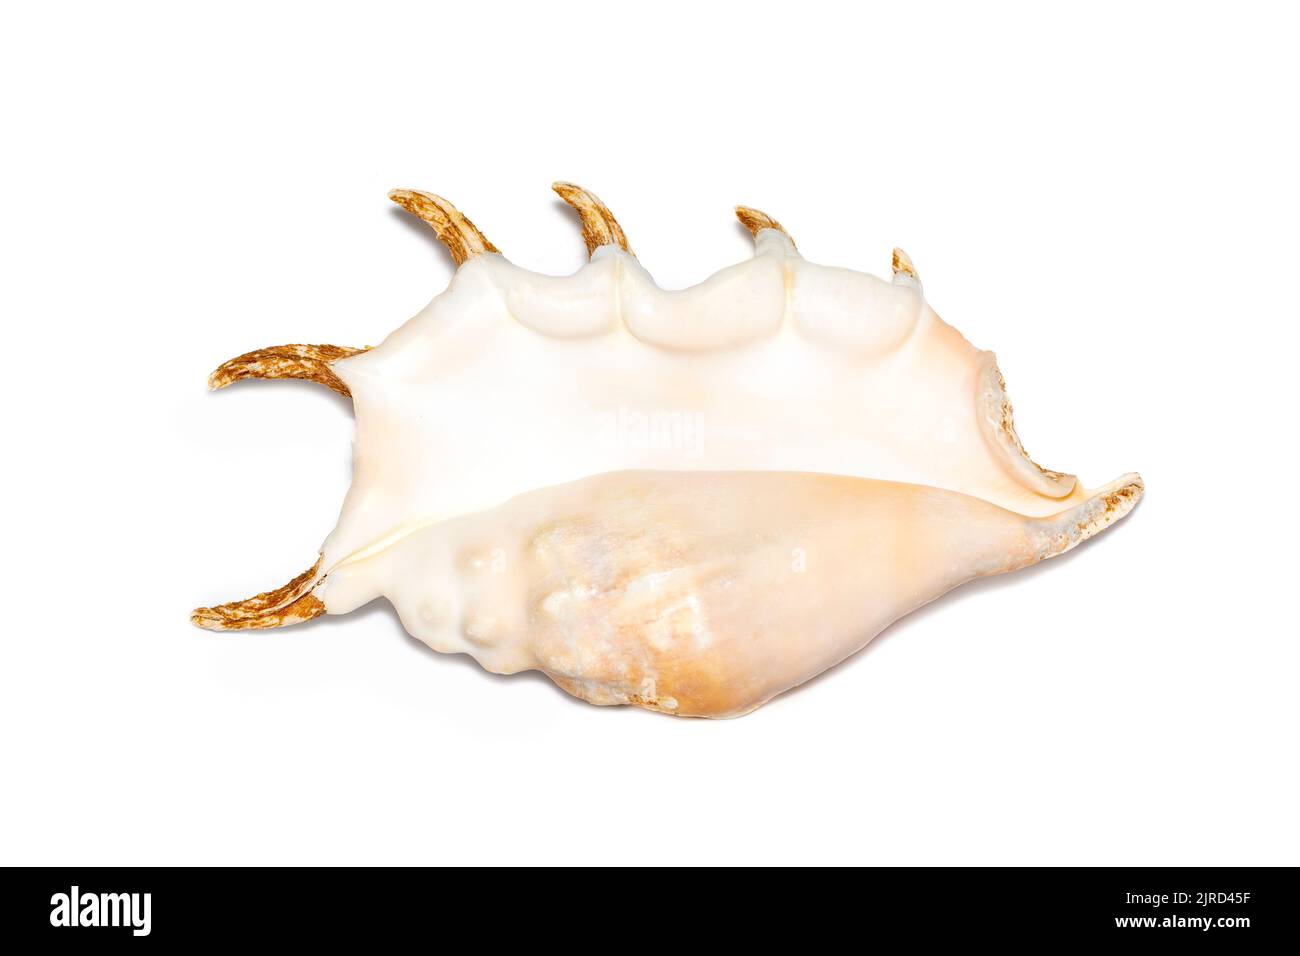 Image of spider conch seashell (Lambis truncata) on a white background. Sea shells. Undersea Animals. Stock Photo